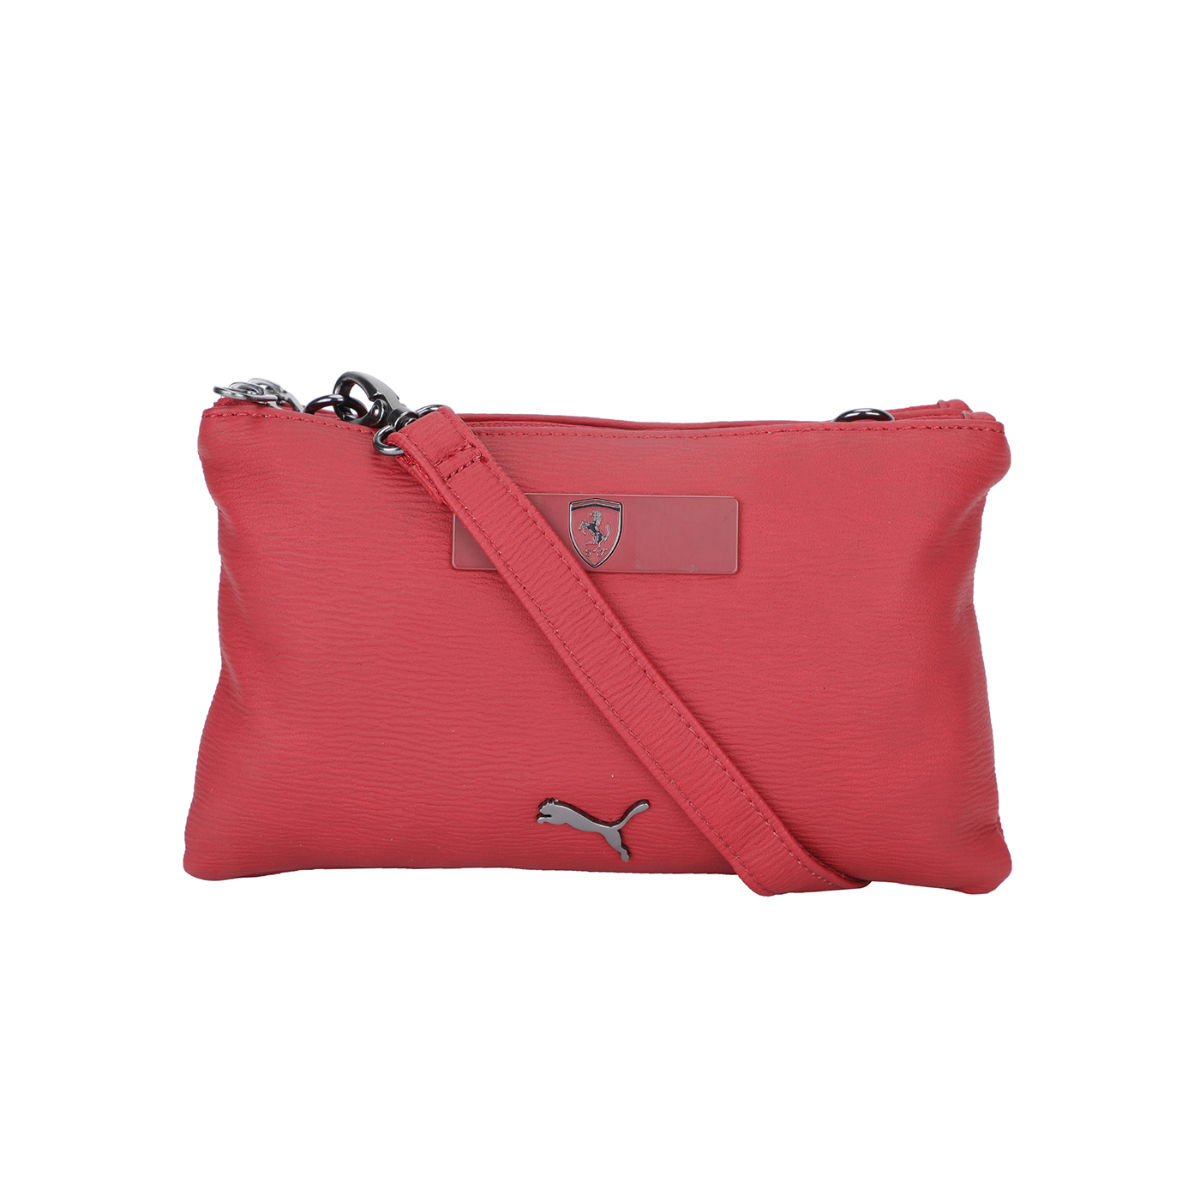 PUMA Brown Bags & Handbags for Women for sale | eBay